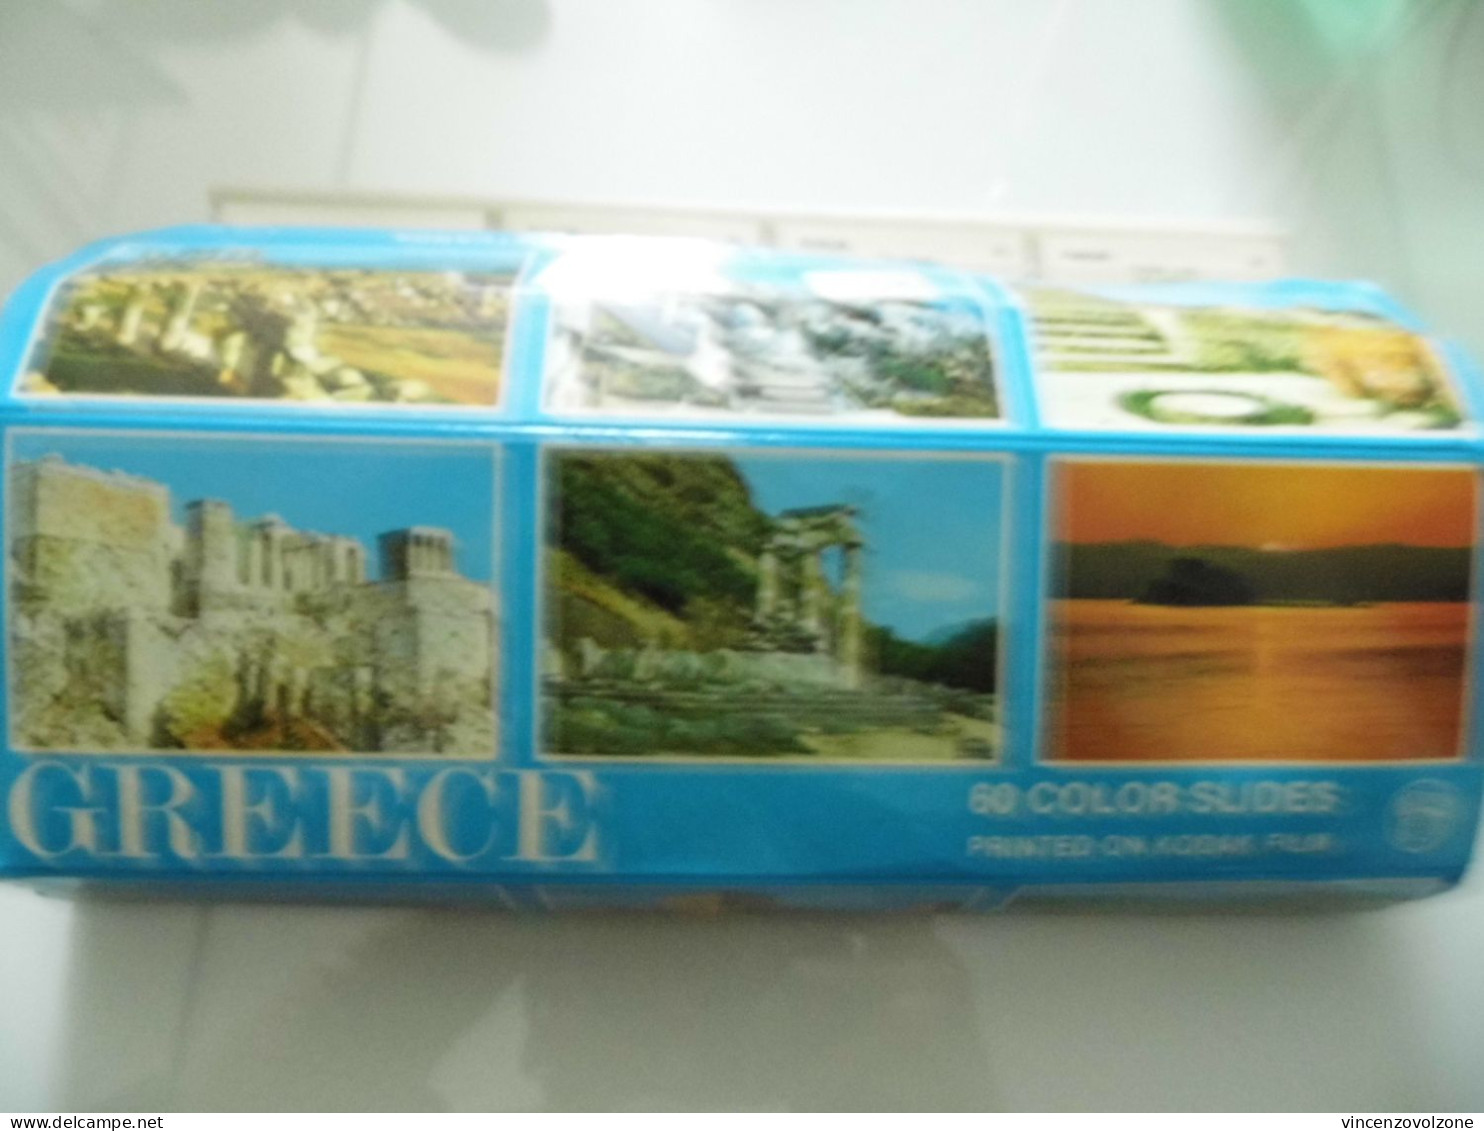 Souvenir Con Custodia  "GREECE 60 COLOR SLIDES" Delfi Editions., Athens Anni 1960 - Dias